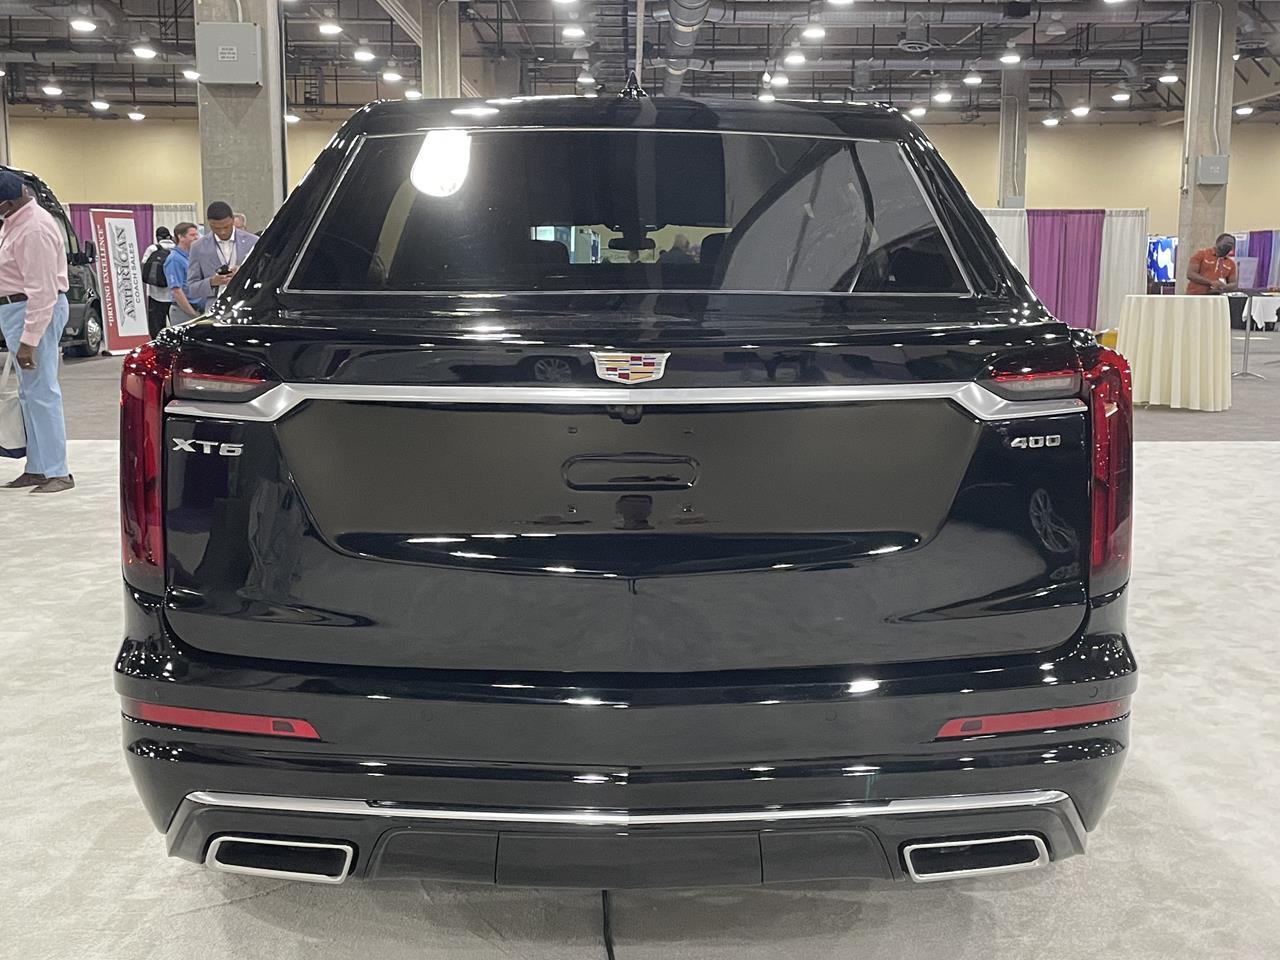 2021 Cadillac SS XT6 Presidential Limousine 819 4